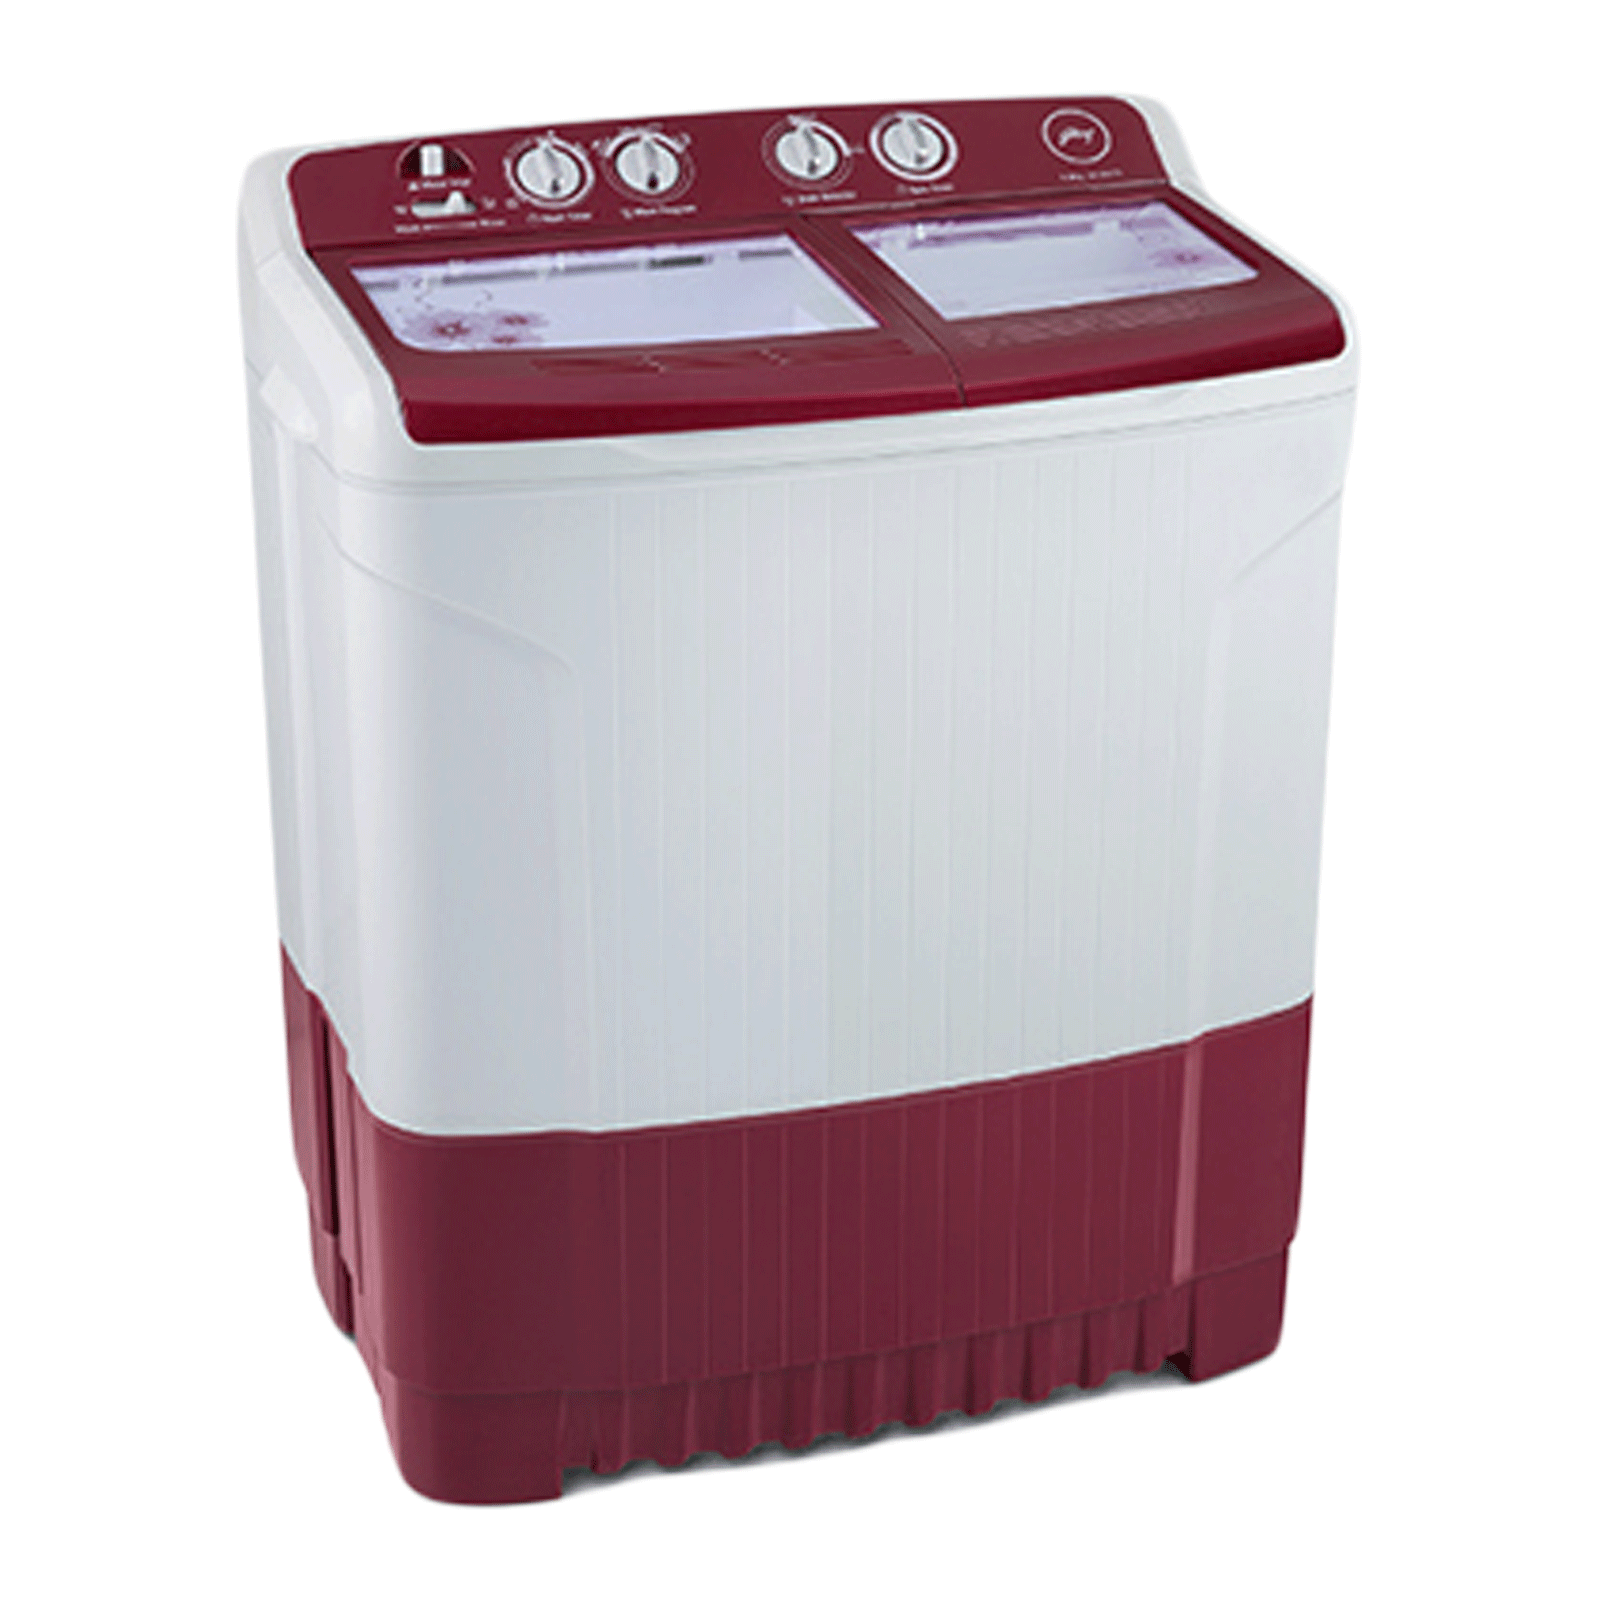 Godrej Edge 7.5 kg Semi Automatic Top Load Washing Machine (Tri-Roto Pulsator, WS EDGE 7.5 WnRd T, Wine Red)_1